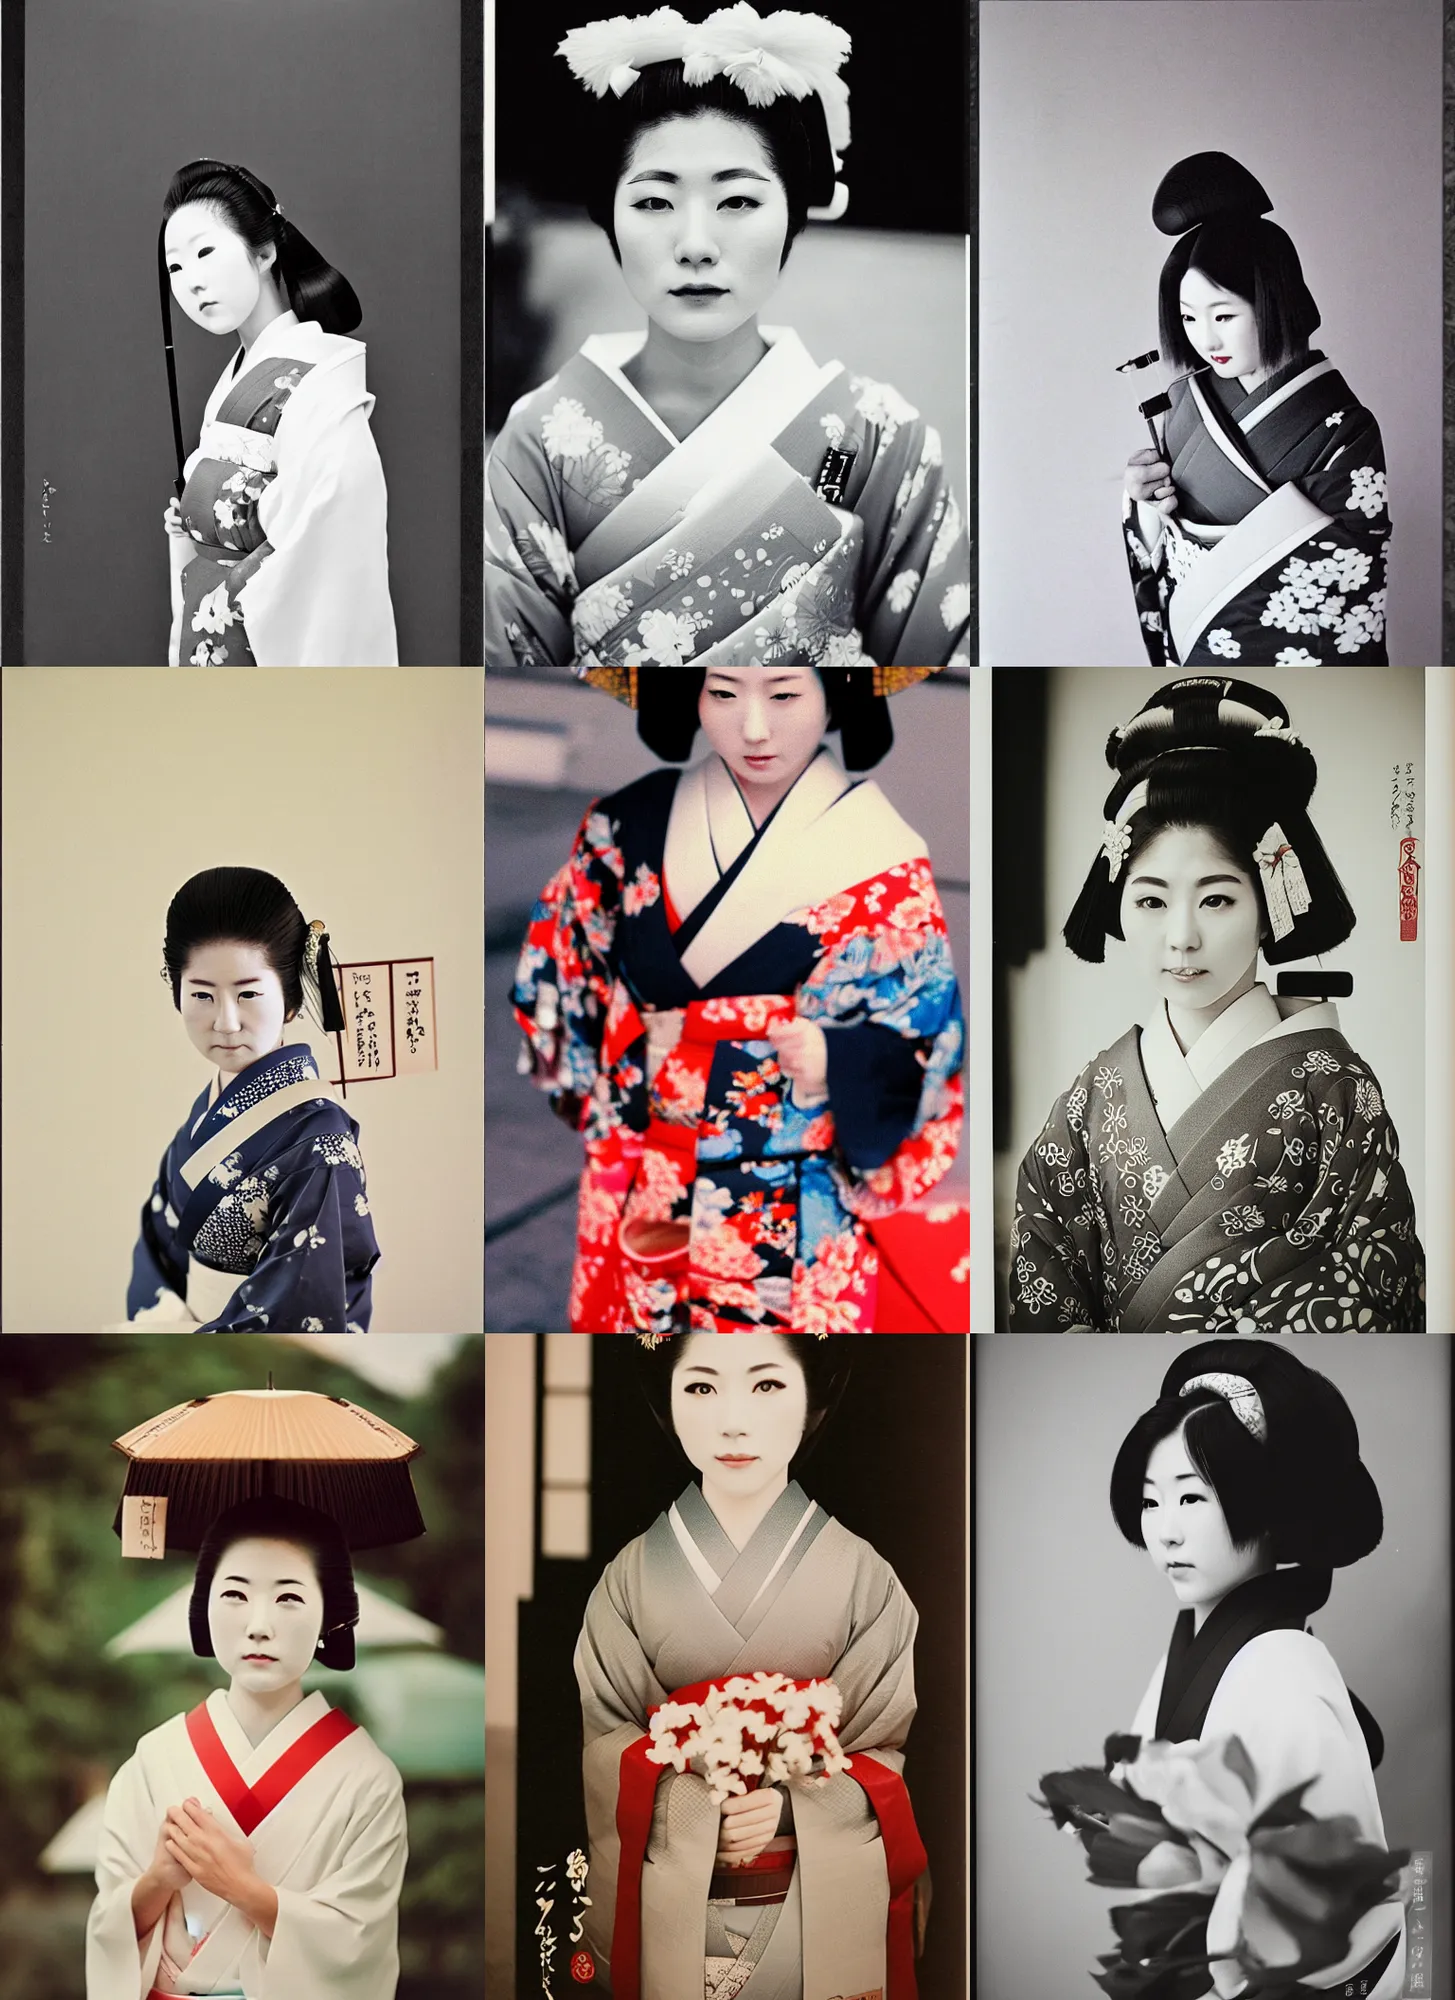 Prompt: Portrait Photograph of a Japanese Geisha Konica Sakuracolor N100